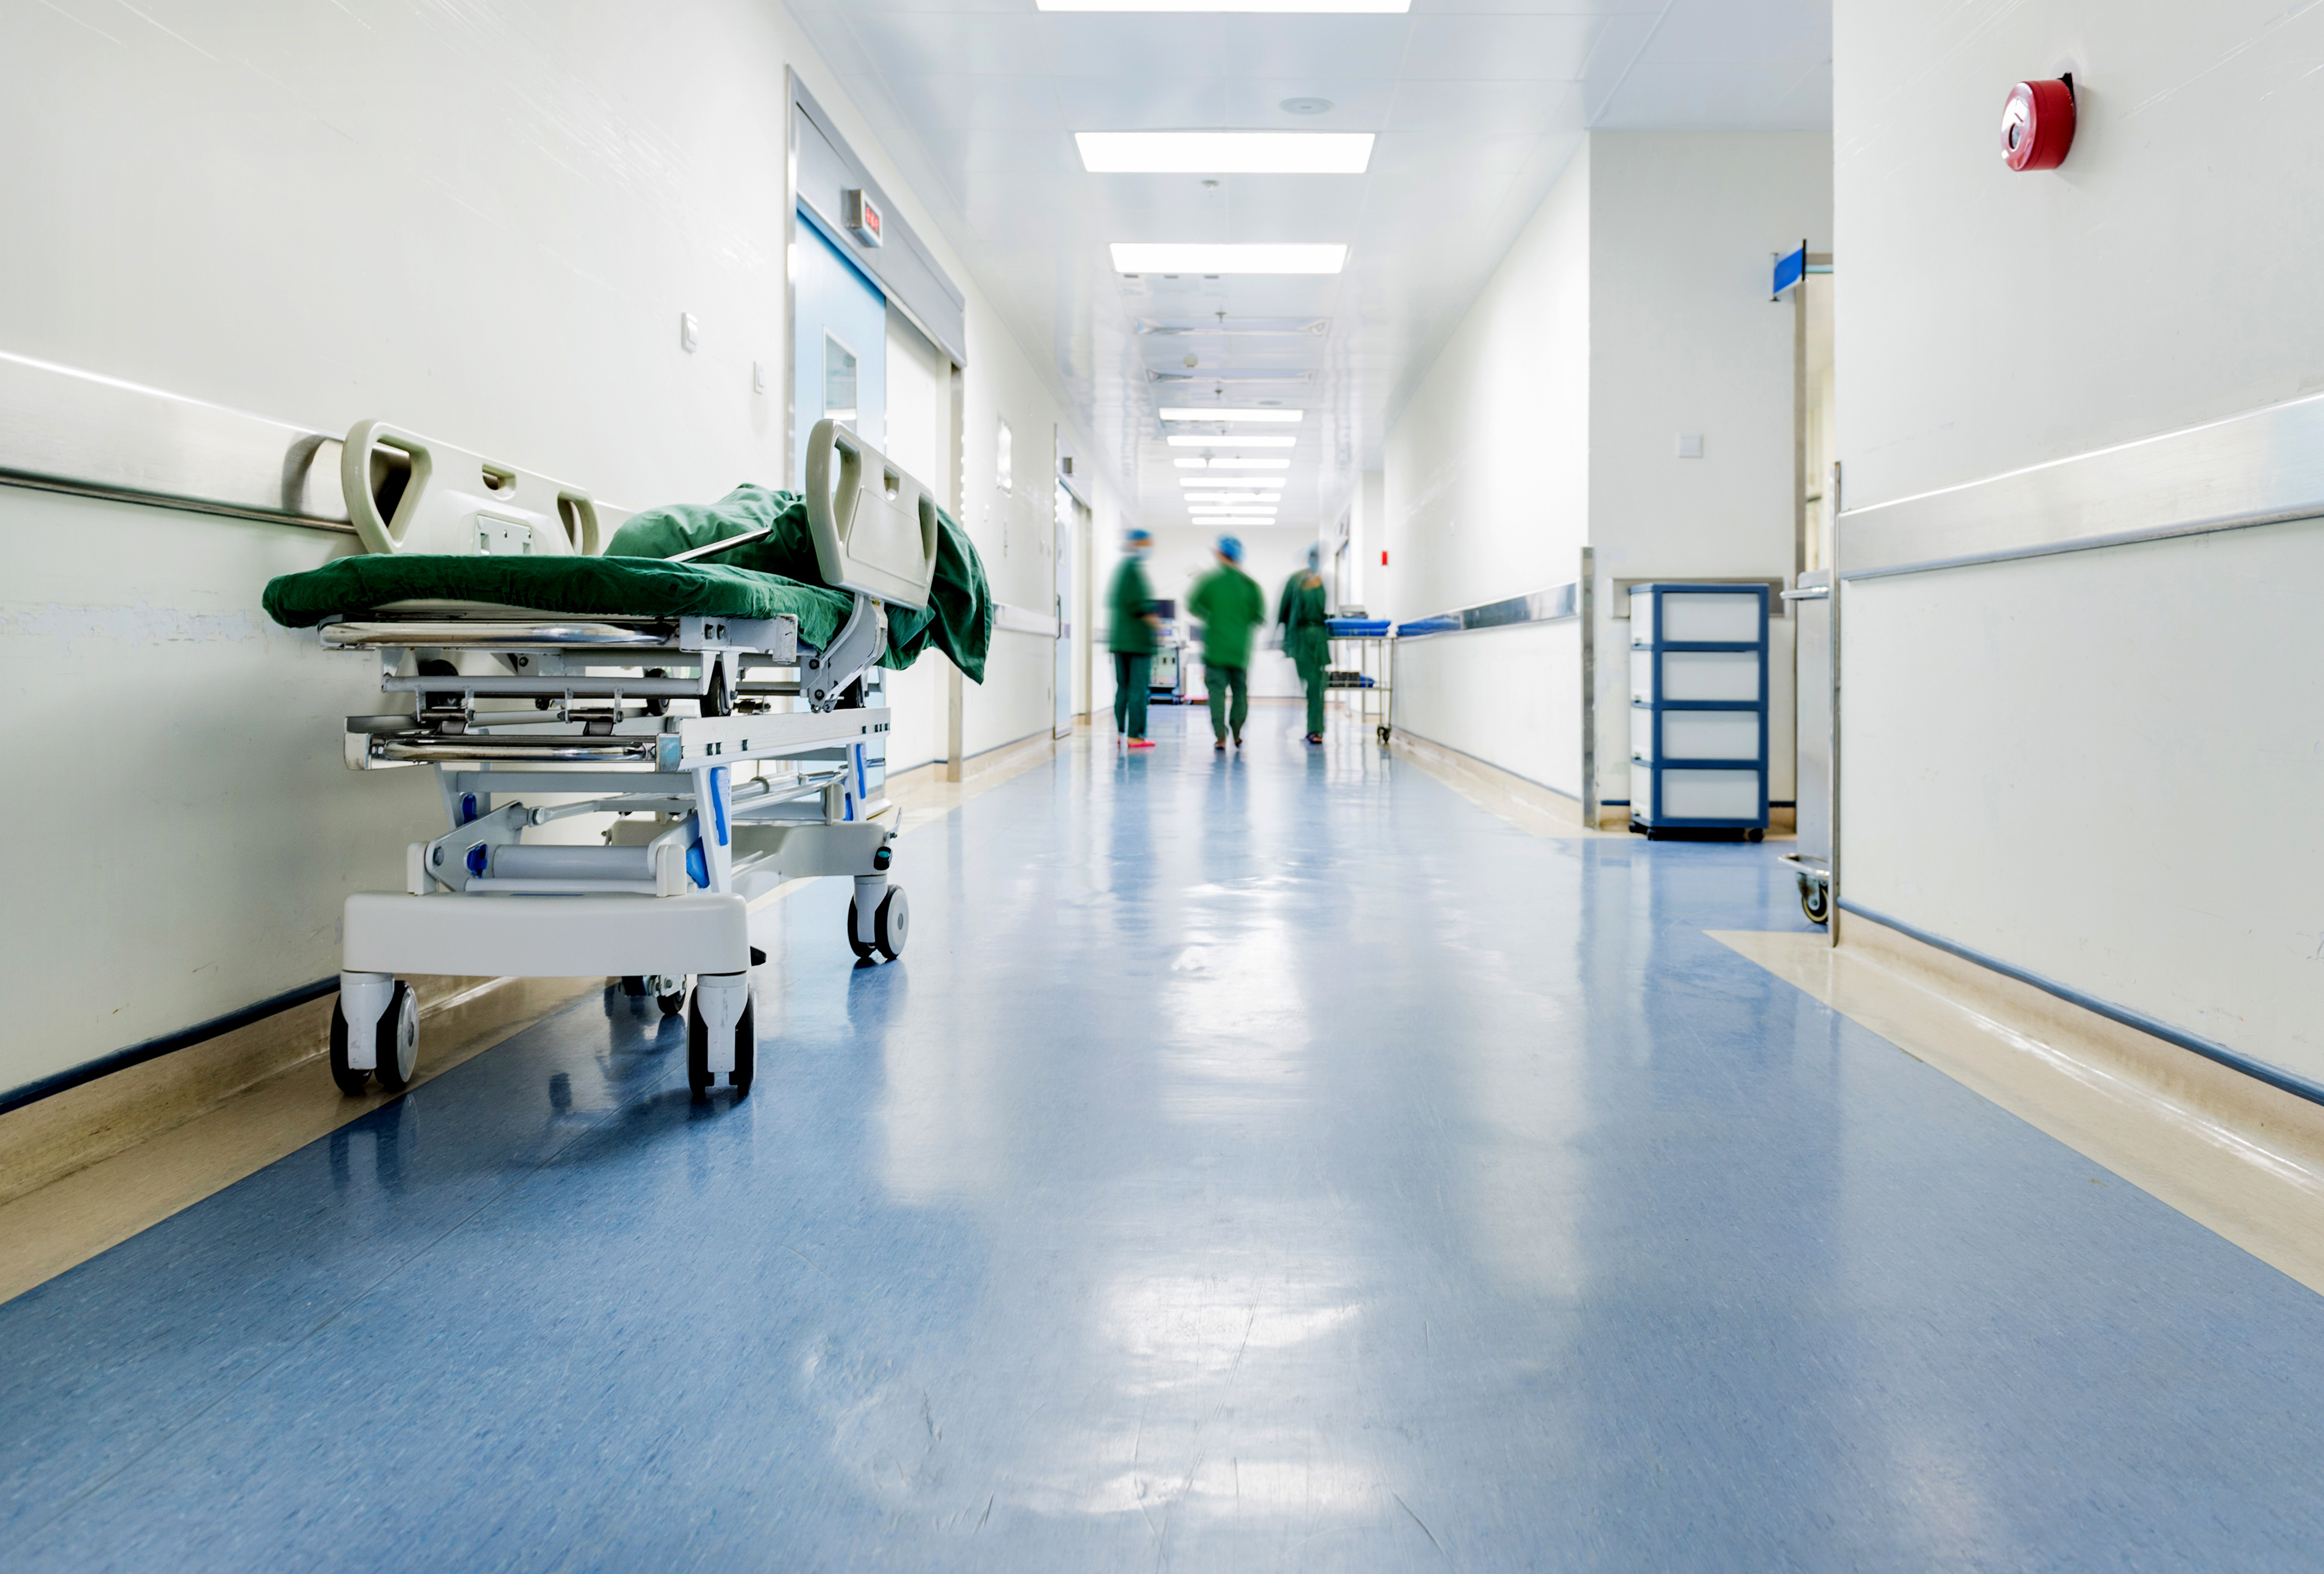 Doctors and nurses walking in hospital | Source: Shutterstock